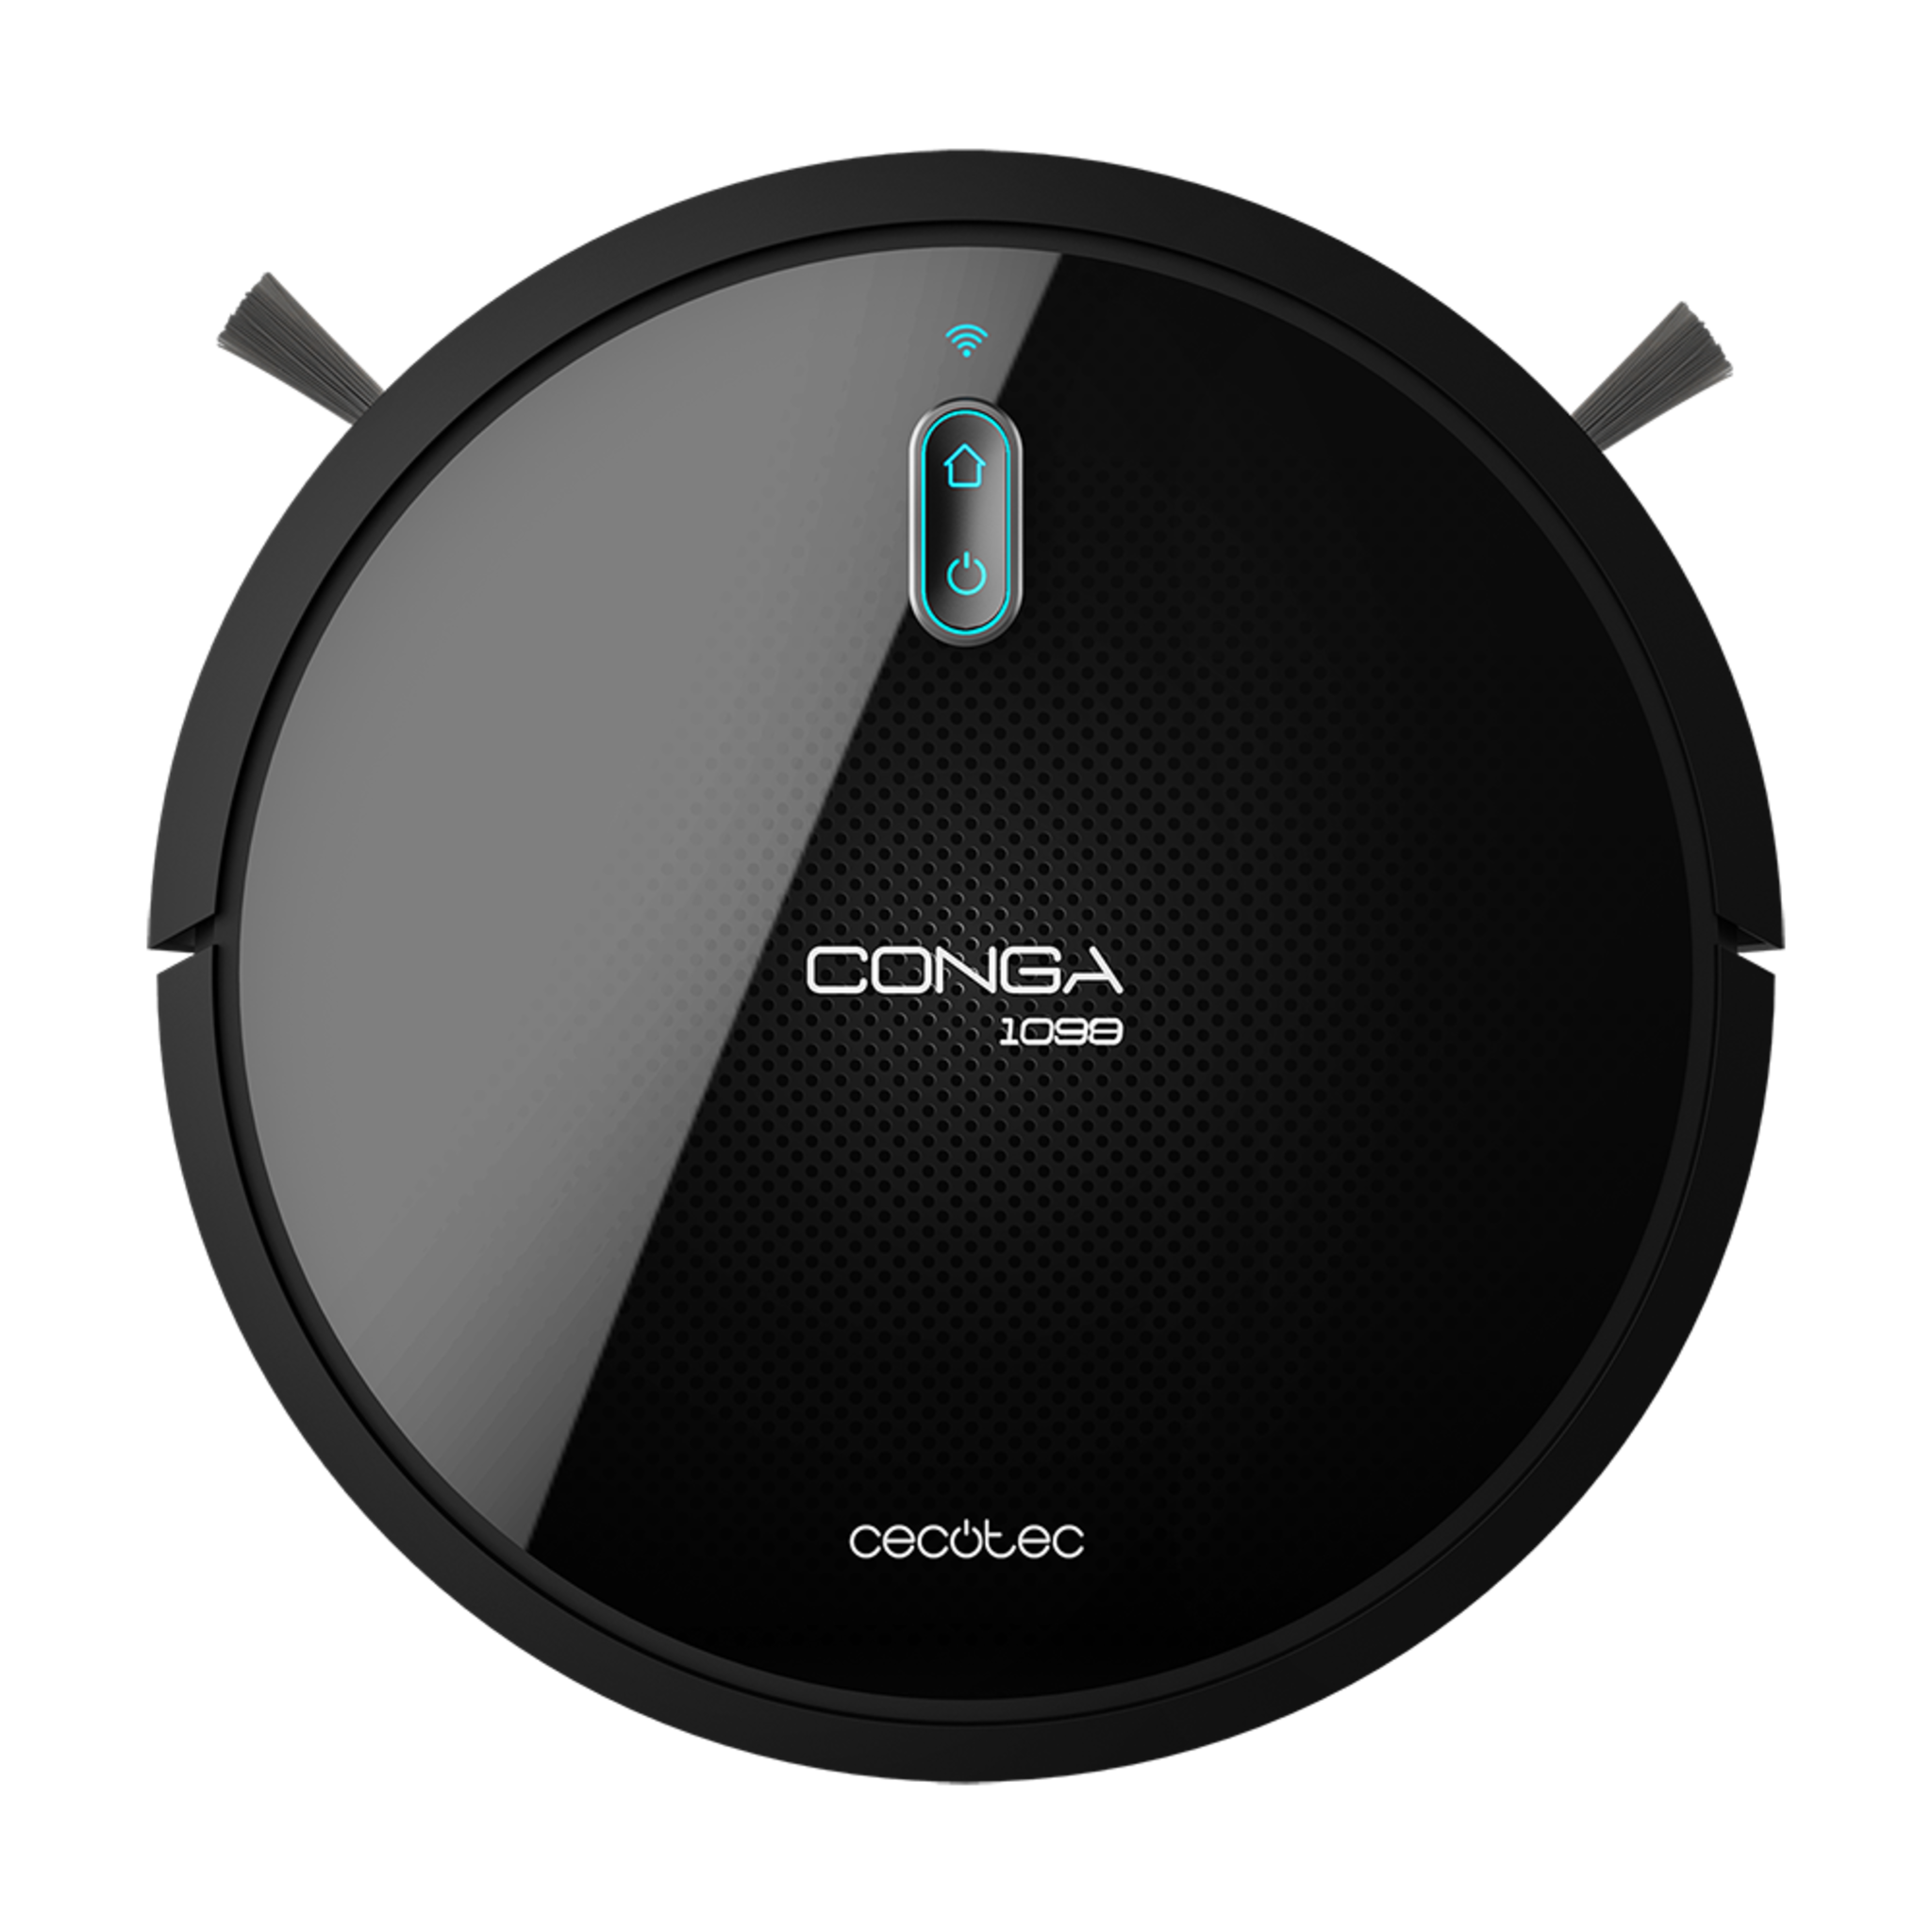 Conga Serie 1099 Connected Saugroboter 1400 Pa, Staubsauger, Kehrer, Mopp, Wischmopp, Haustierbürste, Fernbedienung, kompatibel mit Alexa und Google Home, magnetische Wand